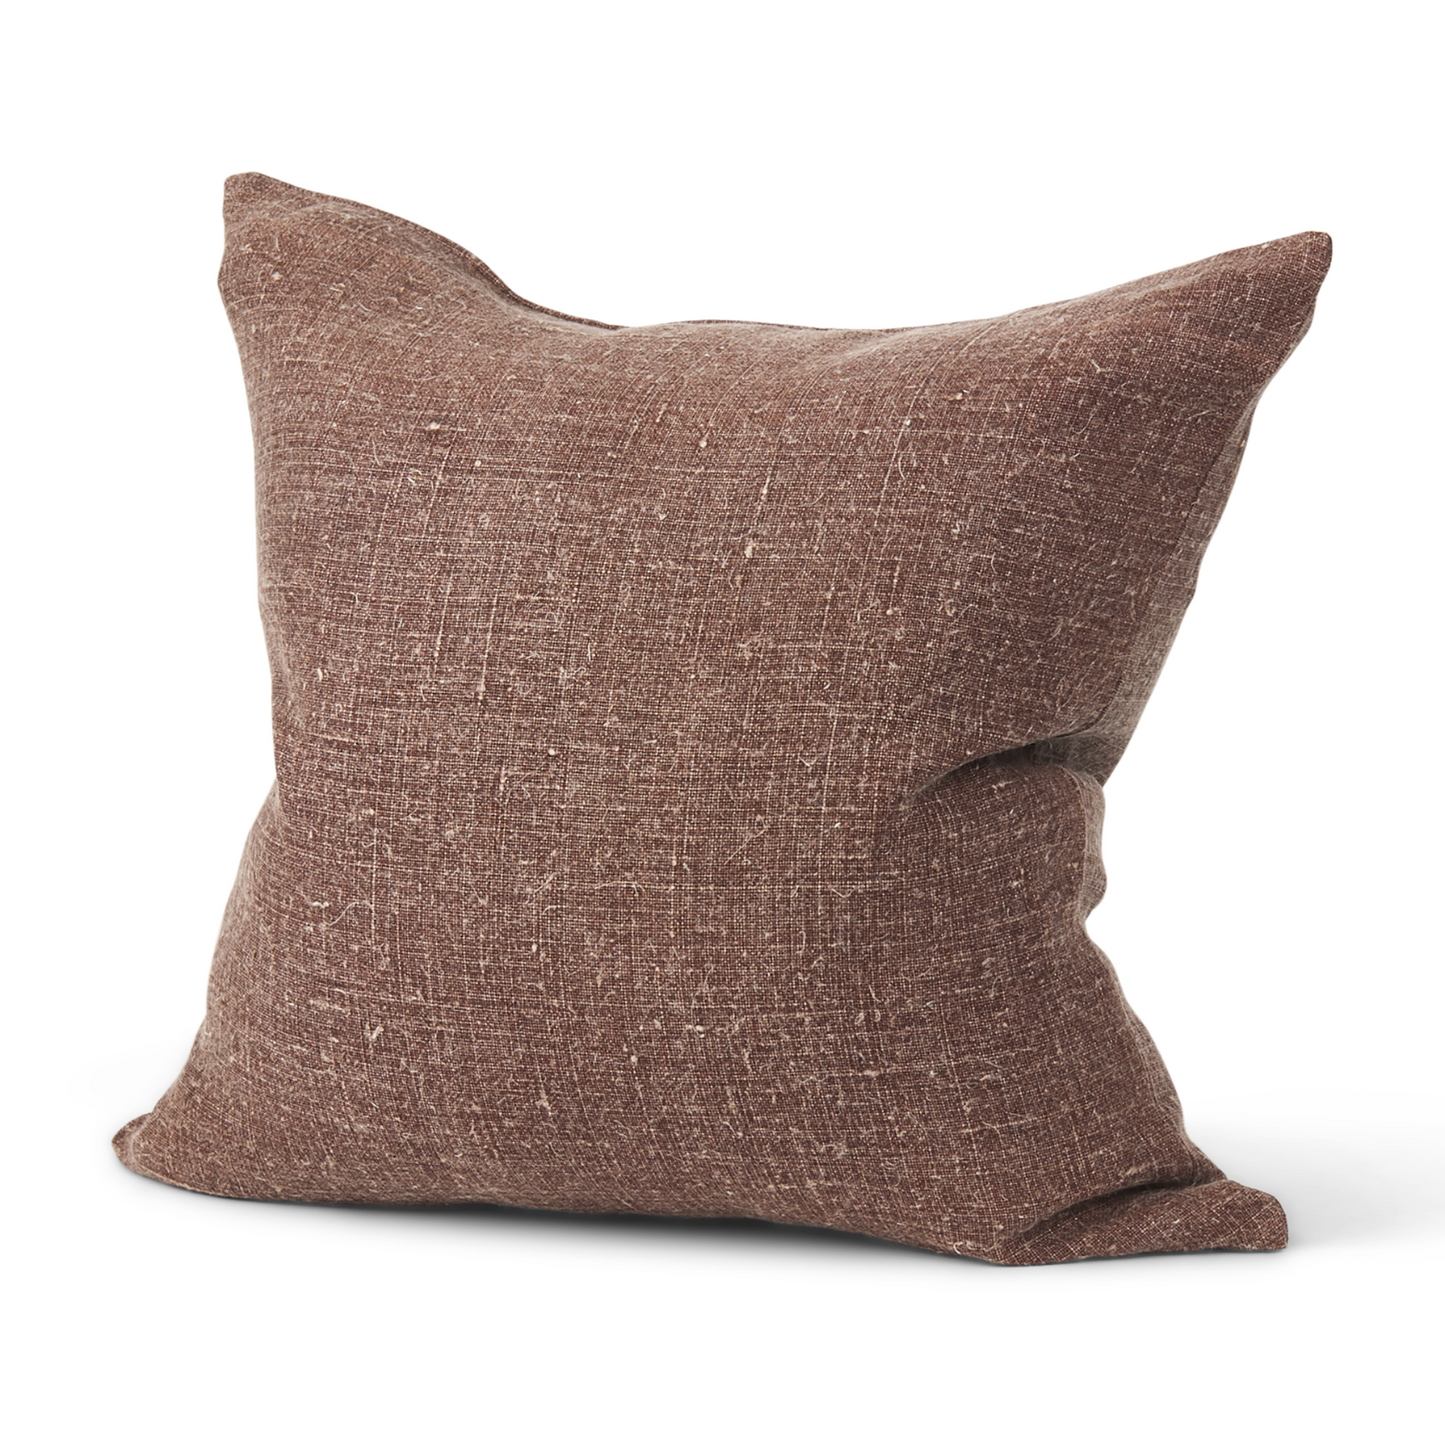 Whitley Brown Linen Pillow Cover